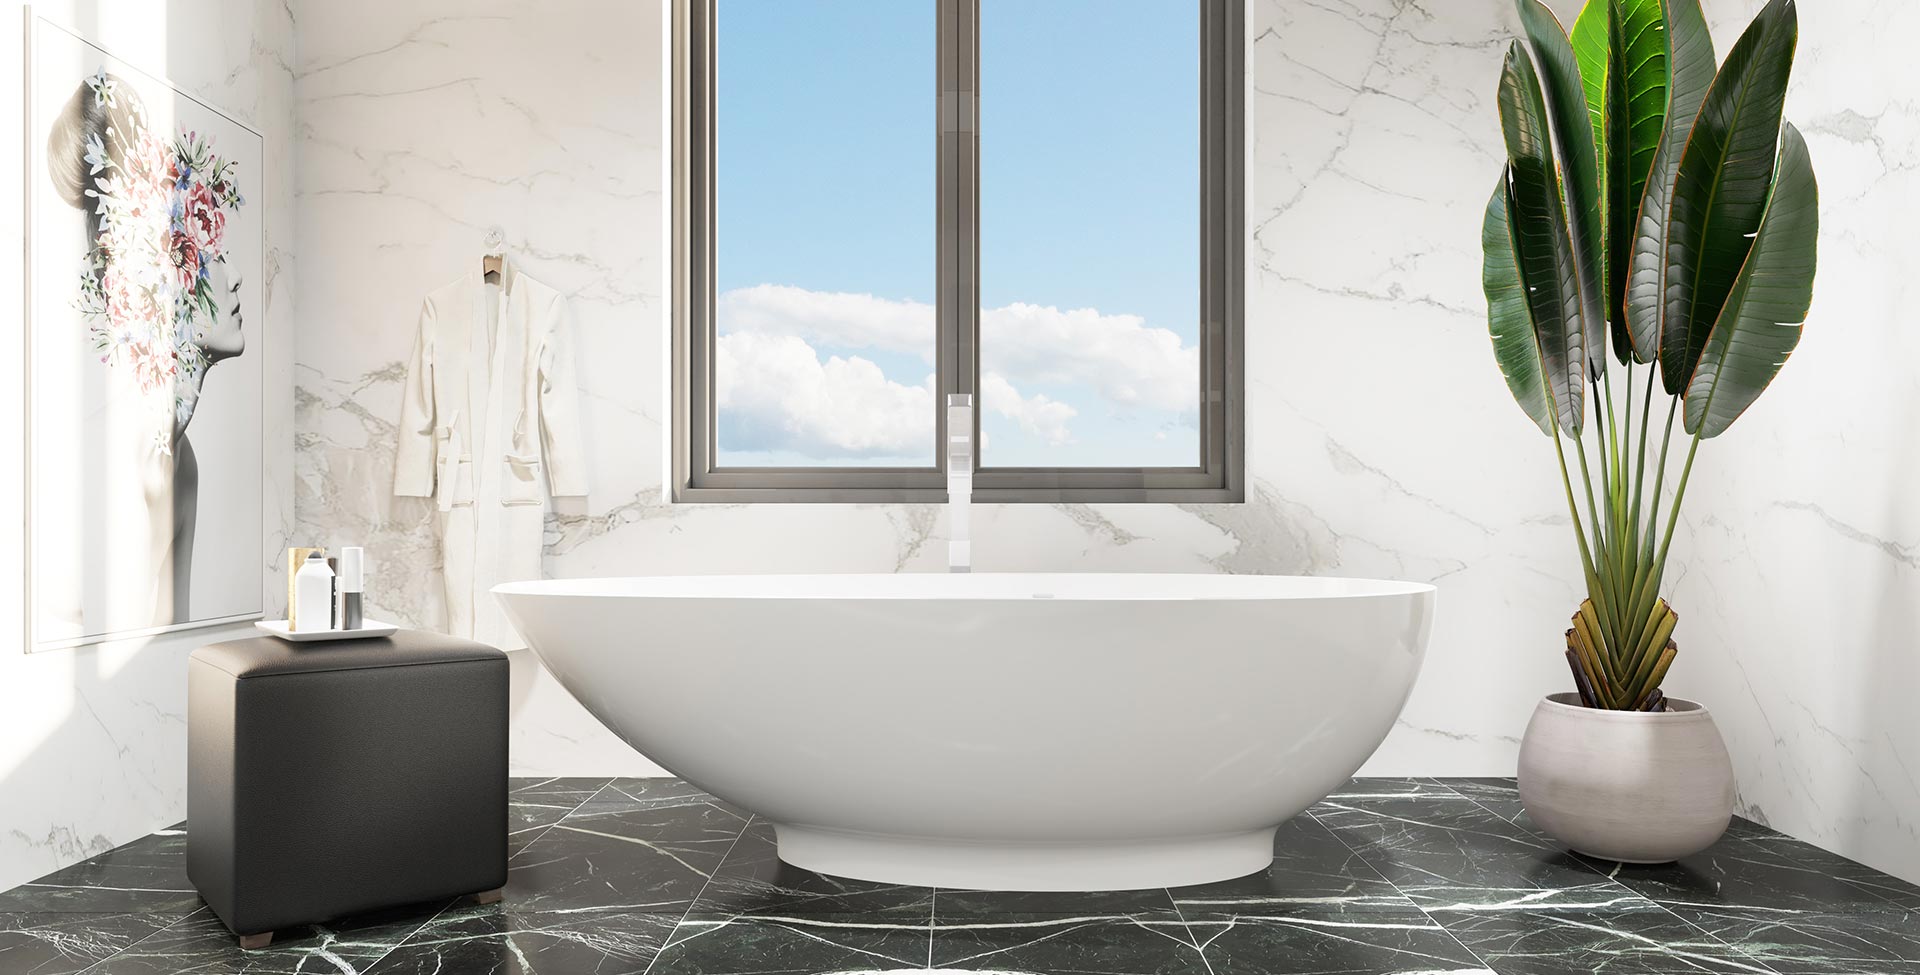 Titan modern designer tub